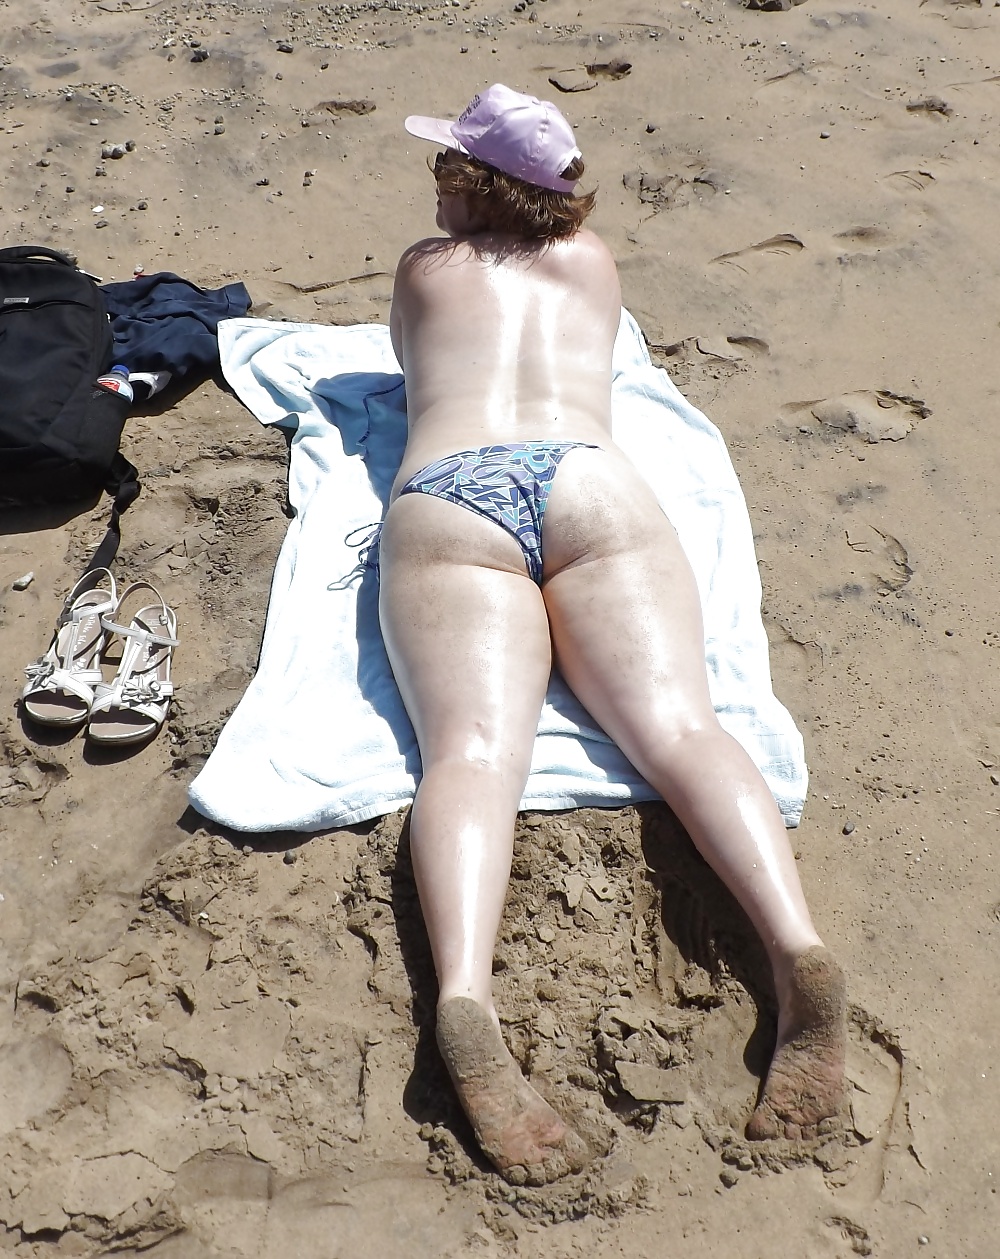 Porn Pics On the beach in Australia